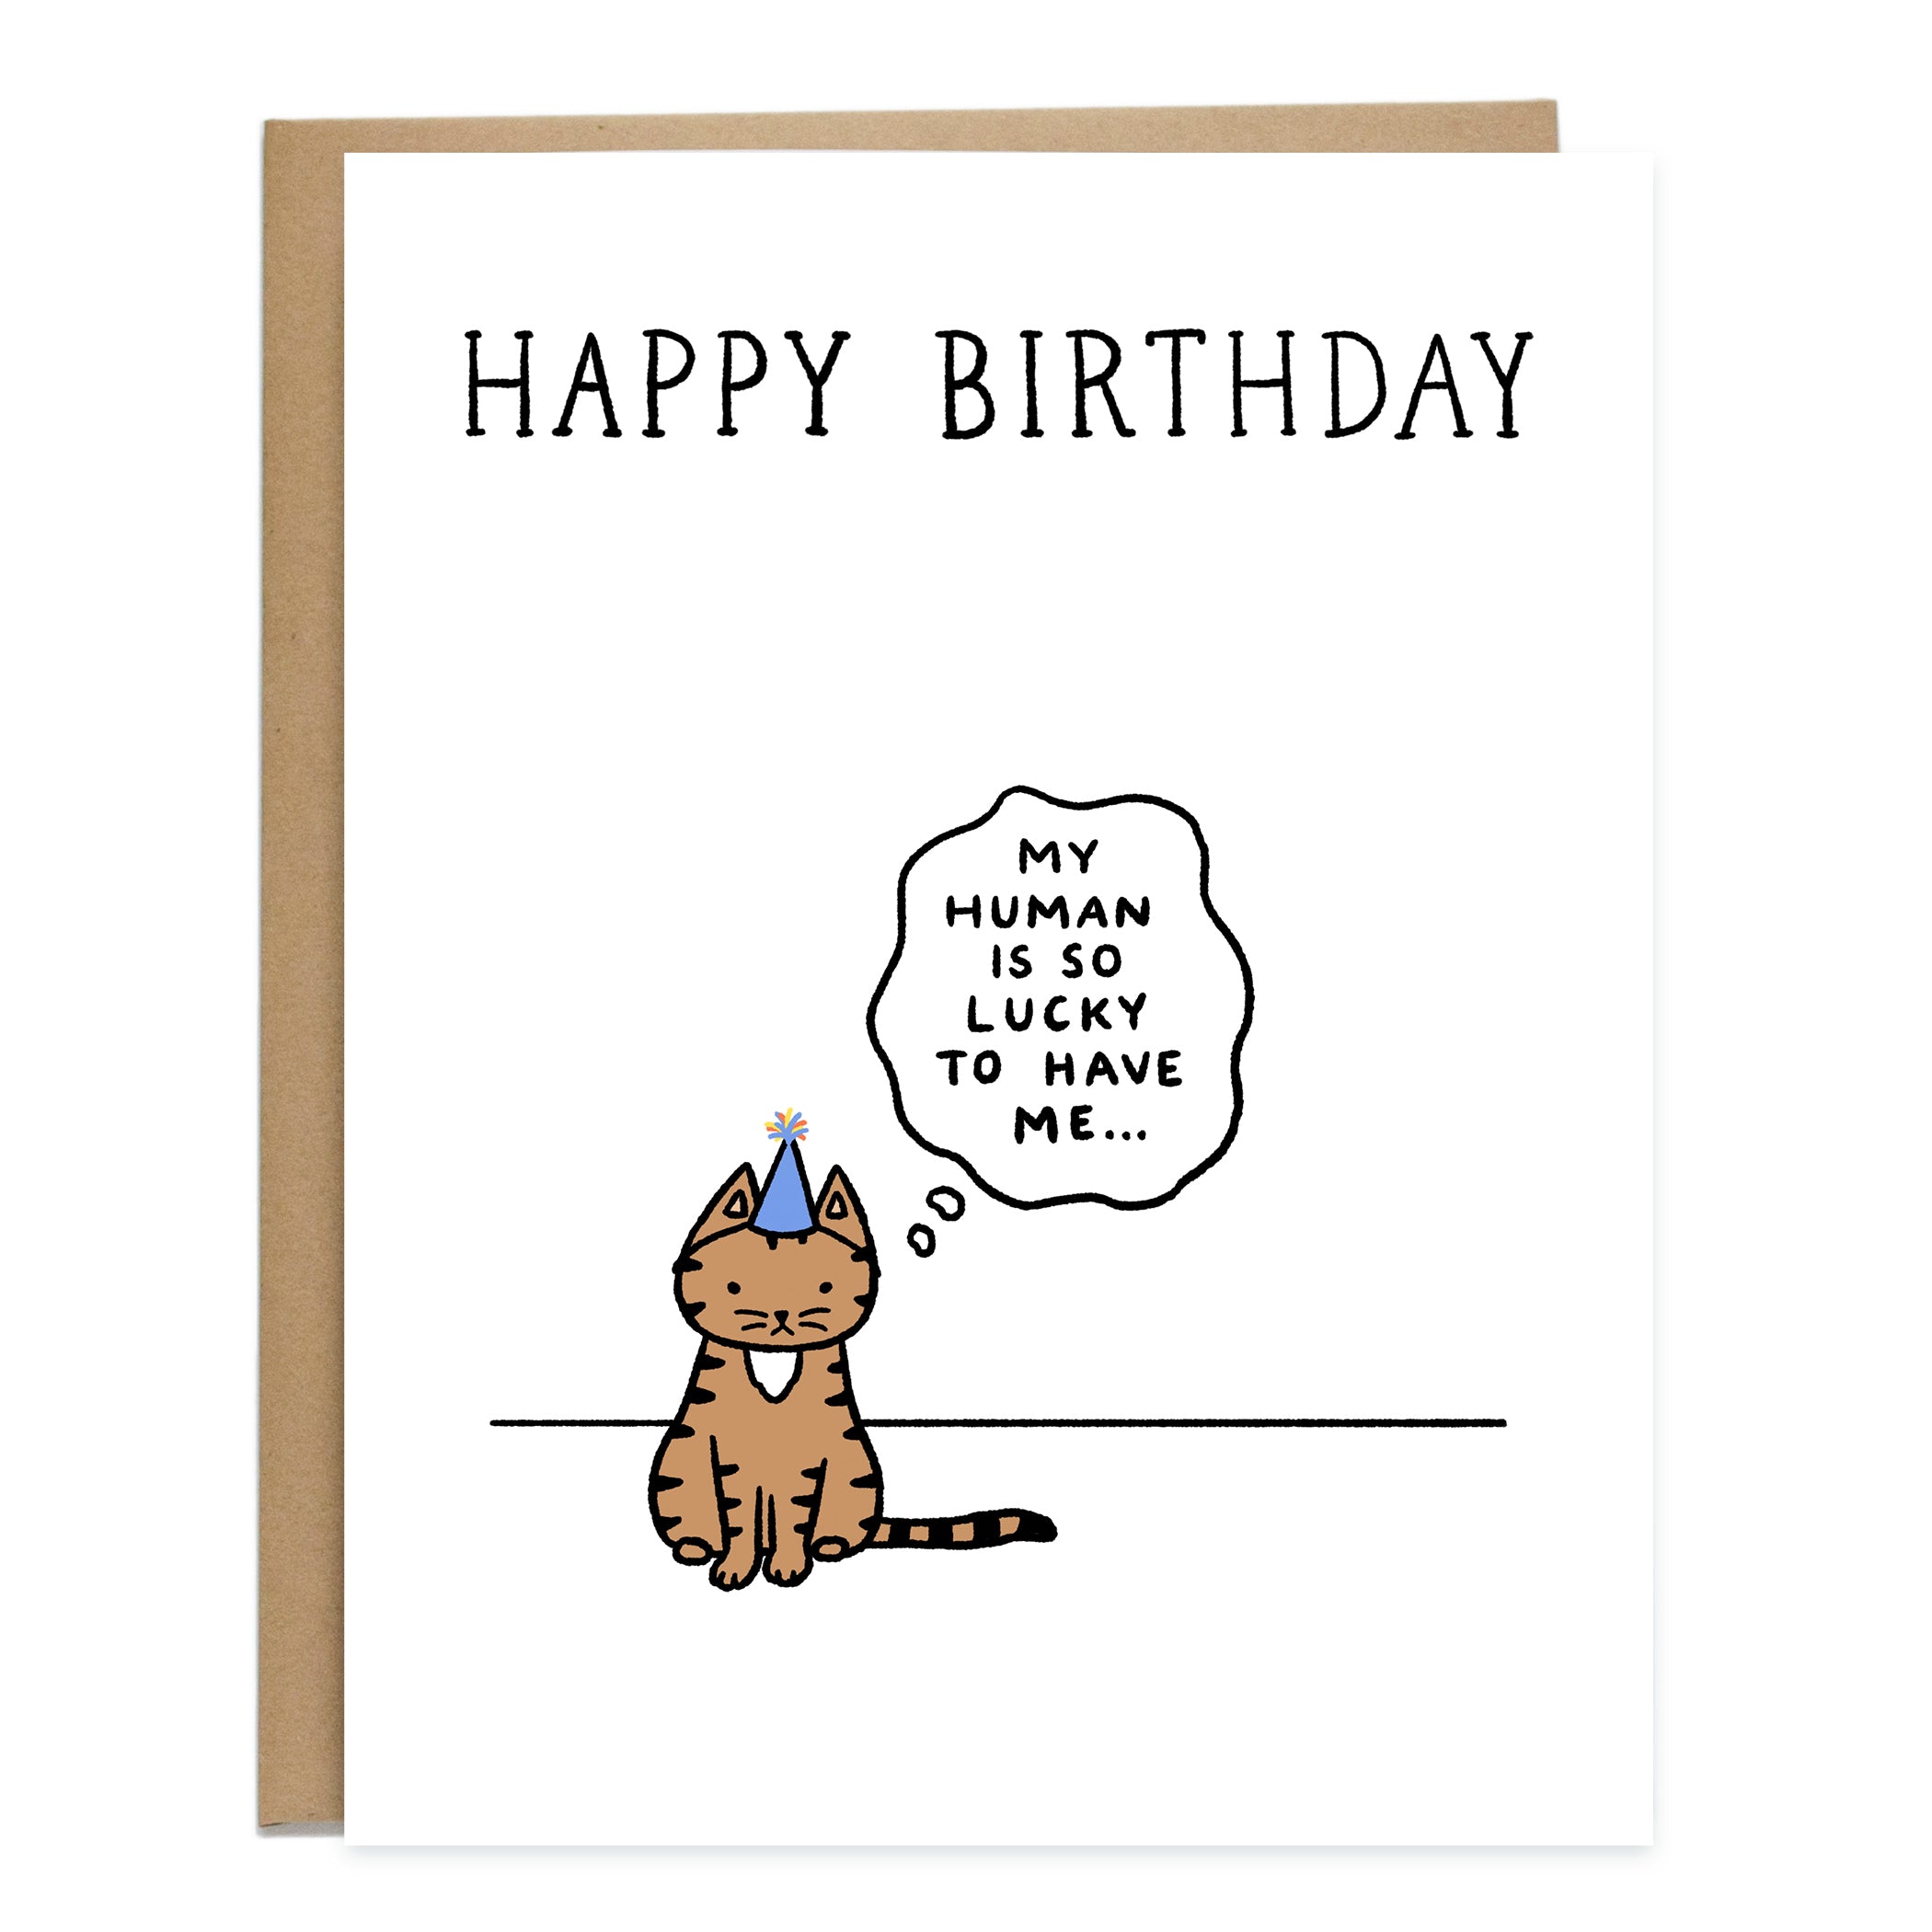 cat birthday